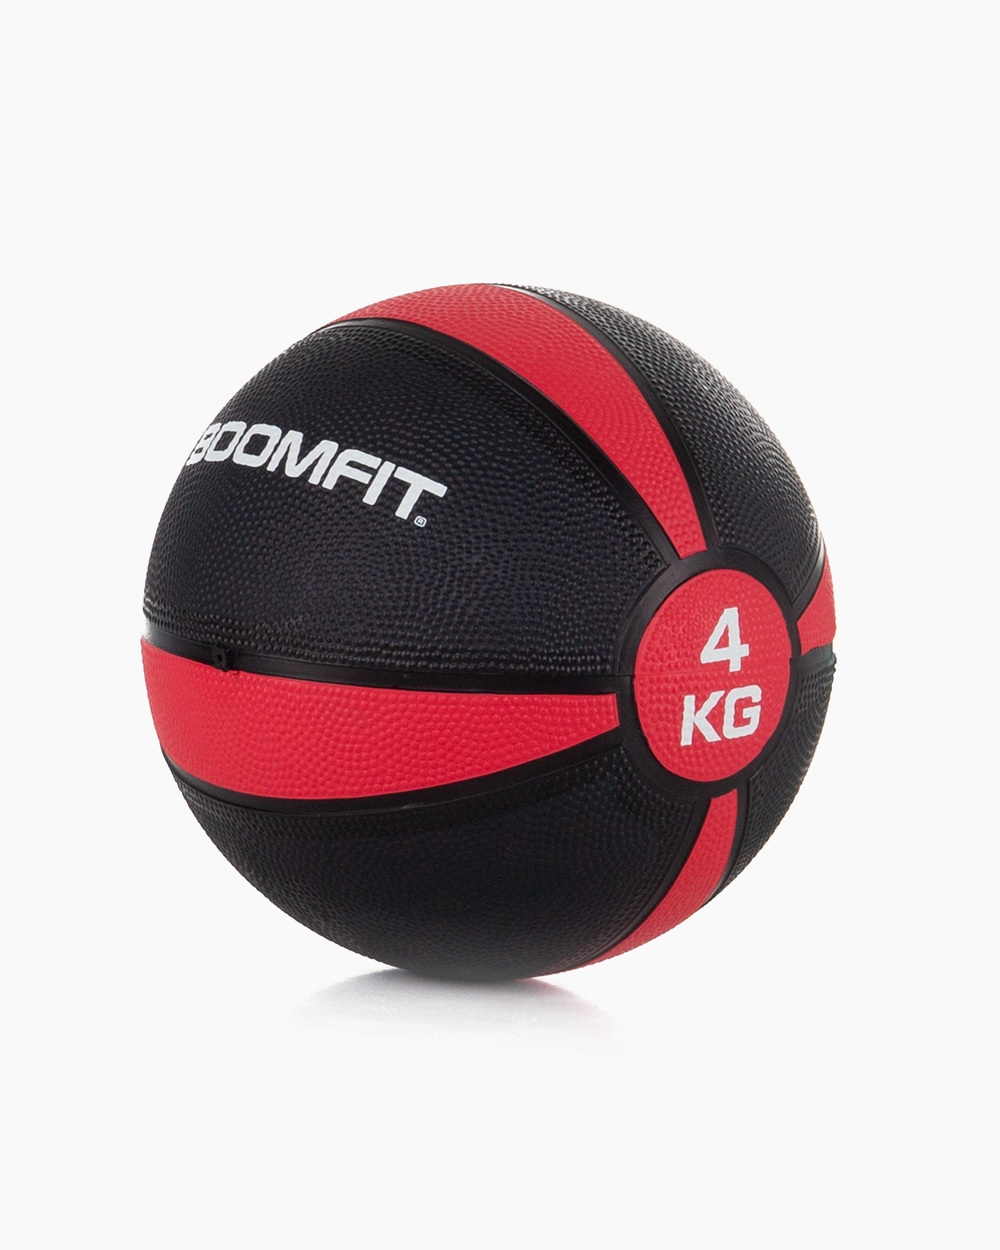 Balón Medicinal Boomfit 4kg - Balón Medicinal 4kg - Boomfit  MKP